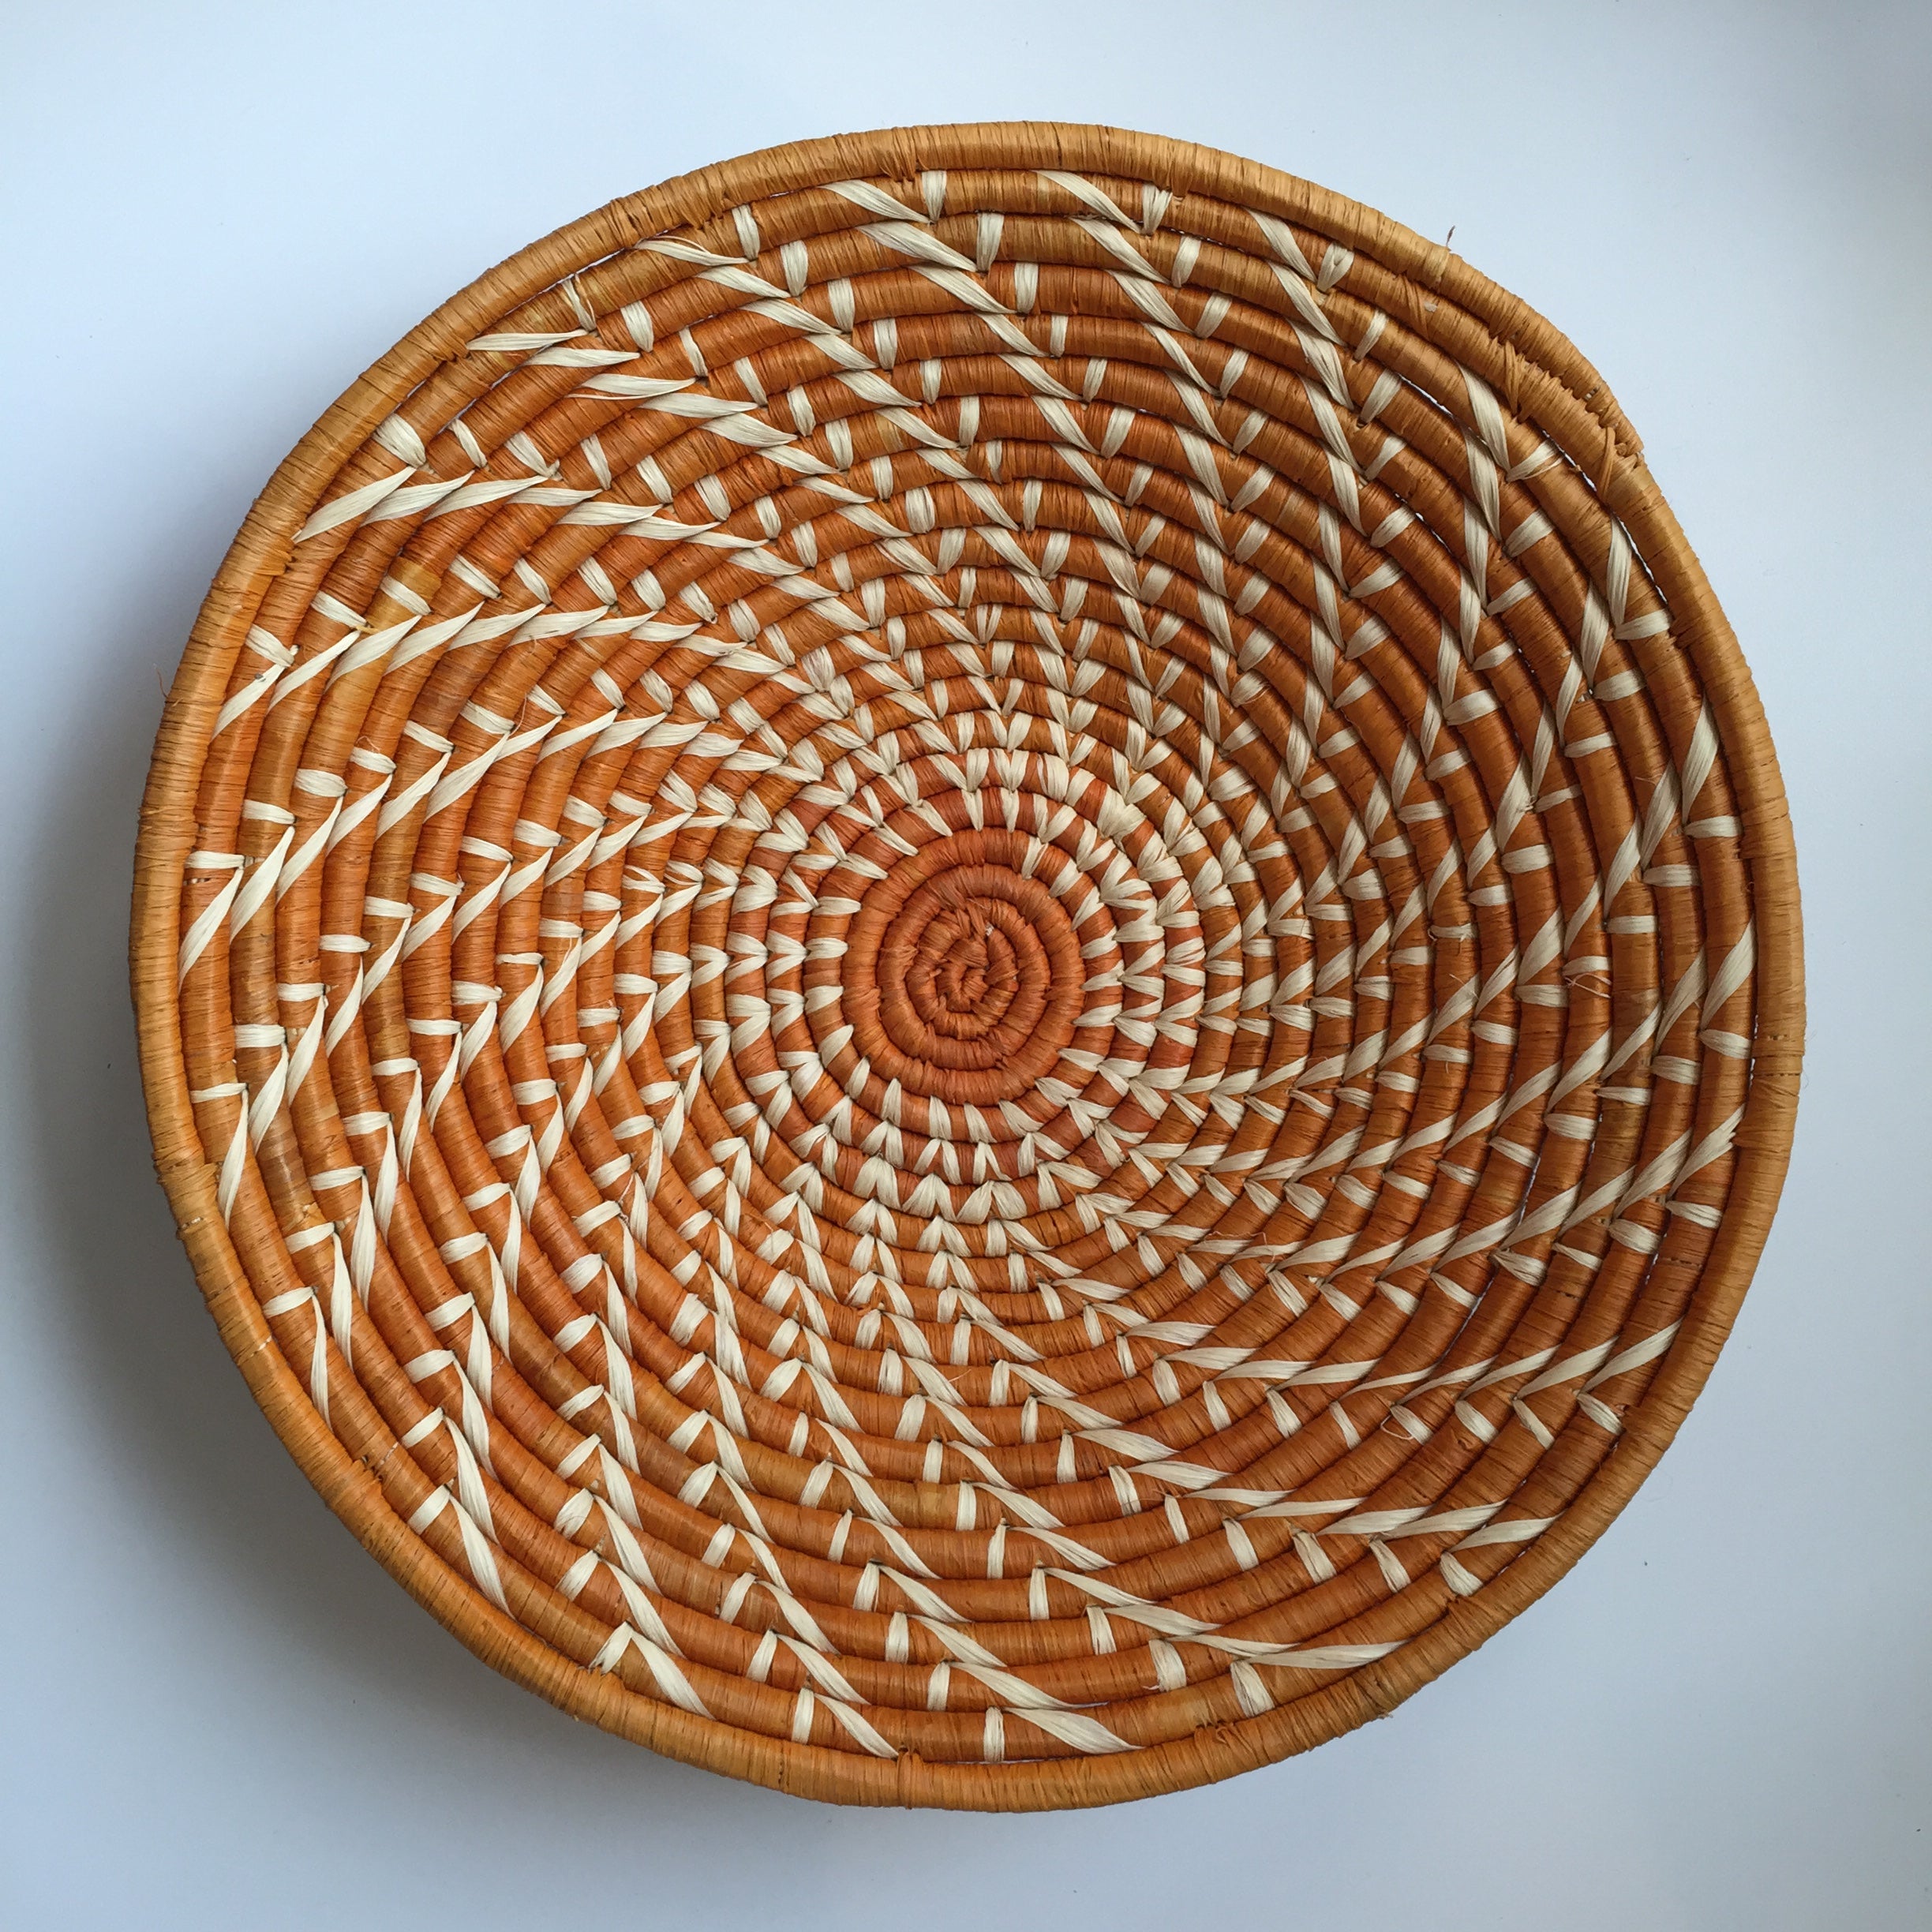 Orange and natural swirl bowl